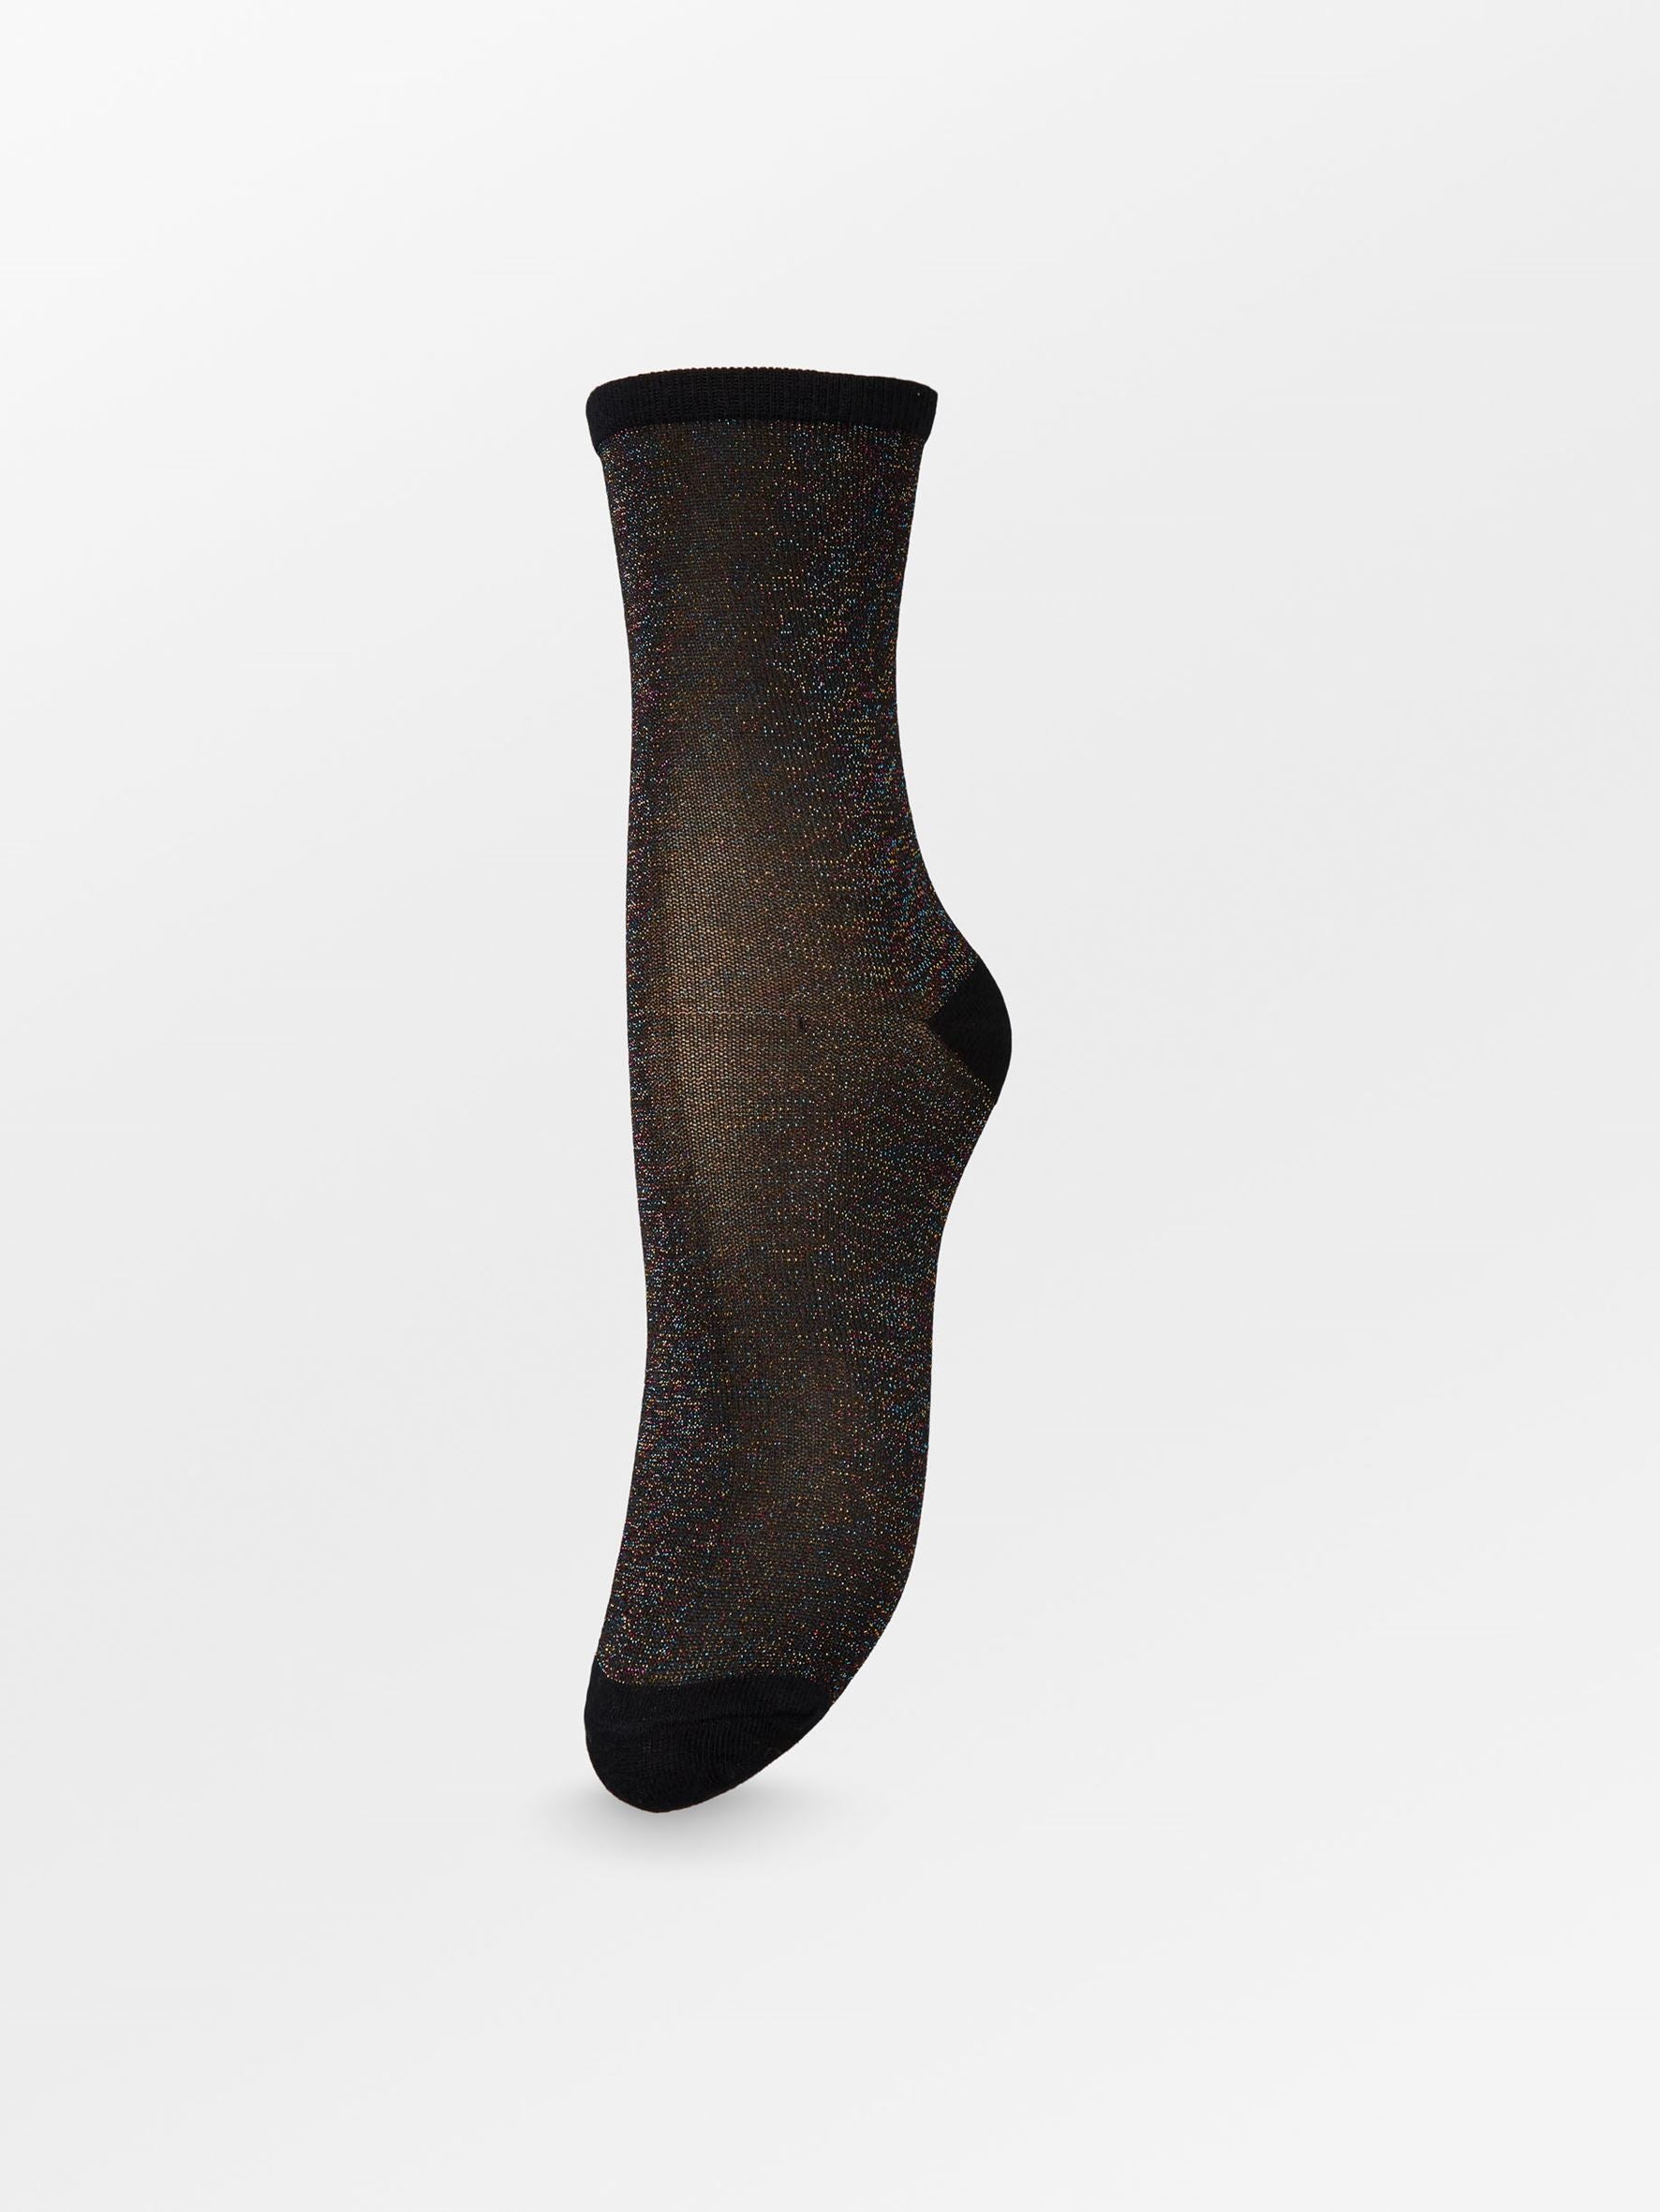 Becksöndergaard, Dina Solid Sock - Multi Col., socks, archive, archive, sale, sale, socks